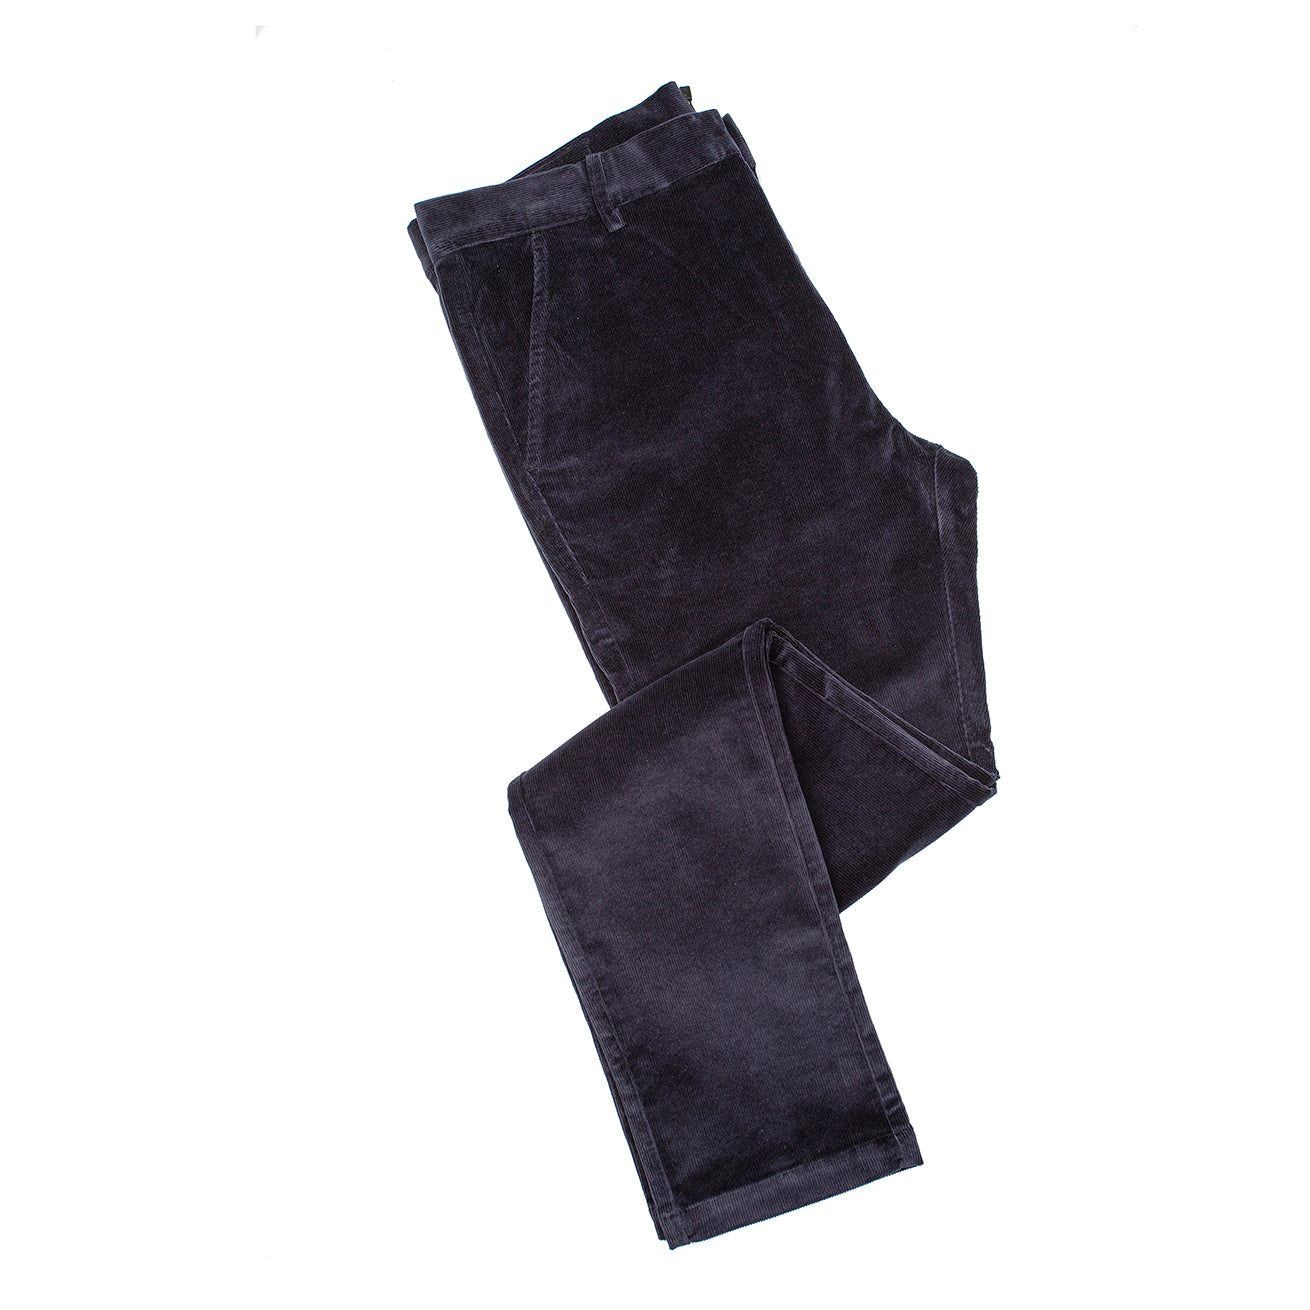 Luxury Side Pocket Cord Pant With Back Jrt Pocket